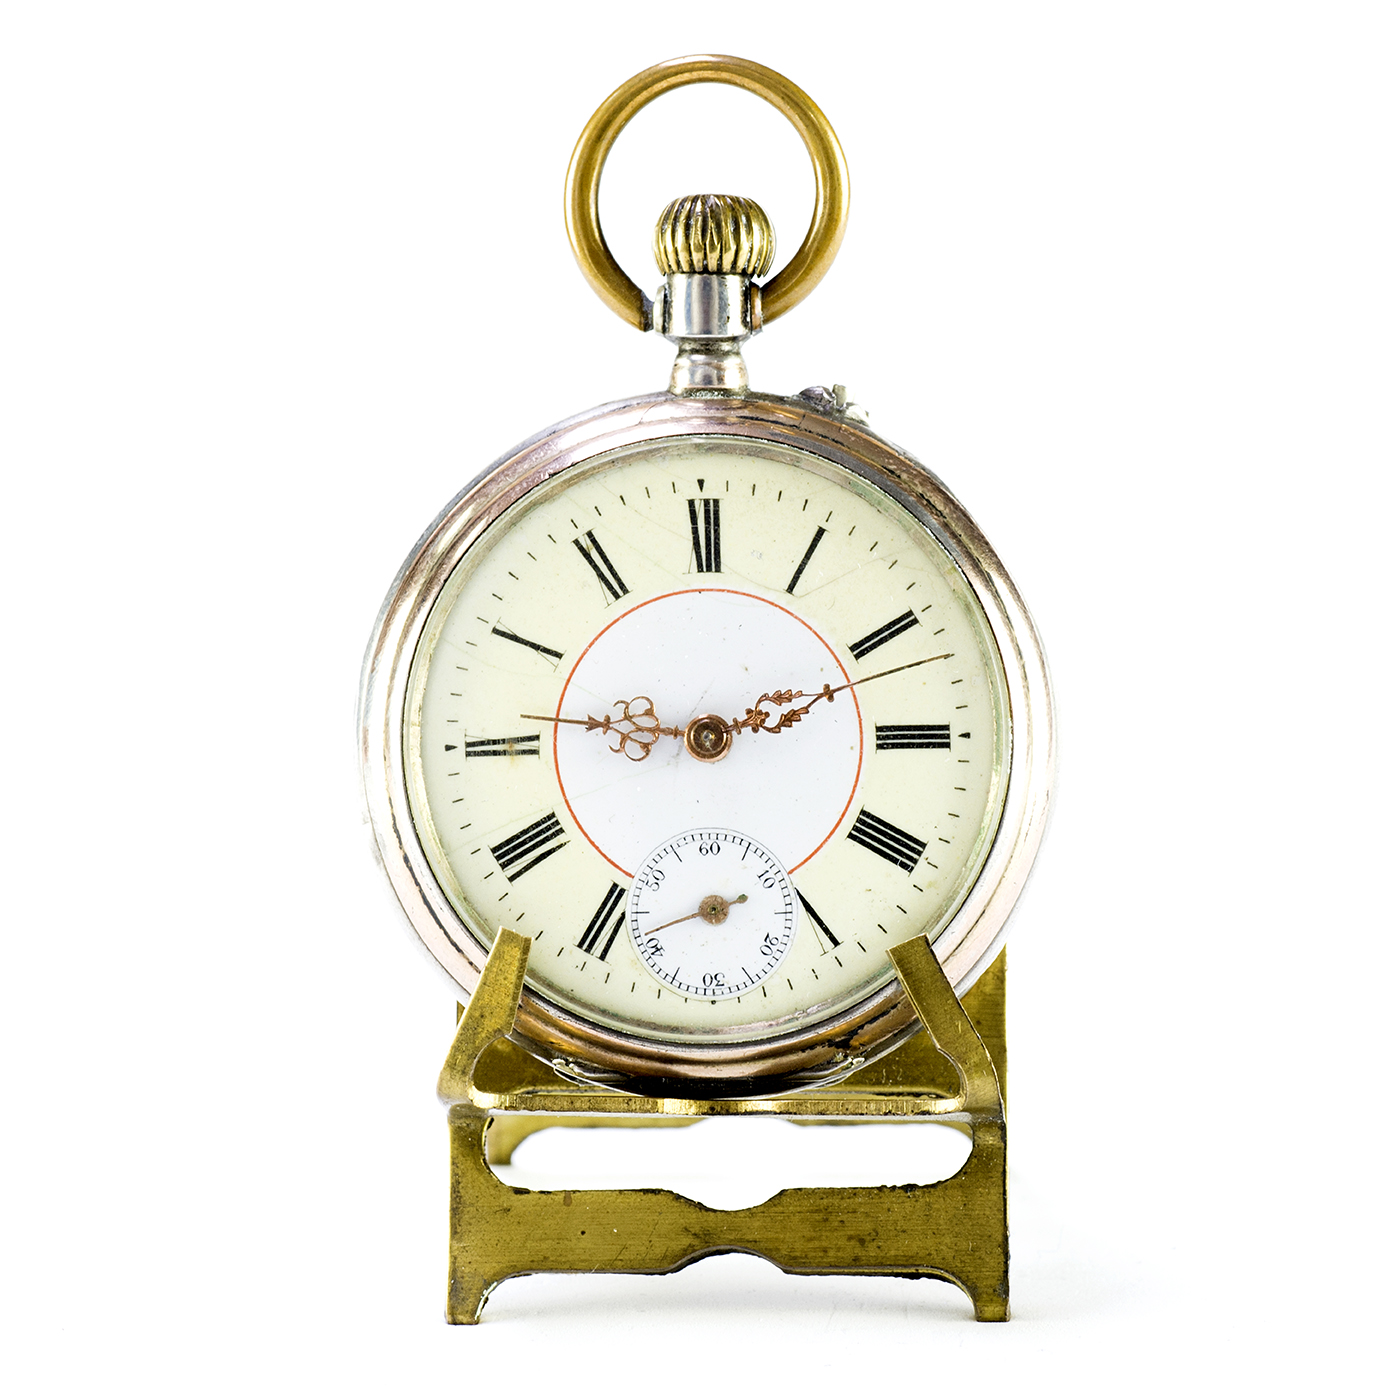 Reloj de Bolsillo, lepine y remontoir. Alemania, ca. 1890.